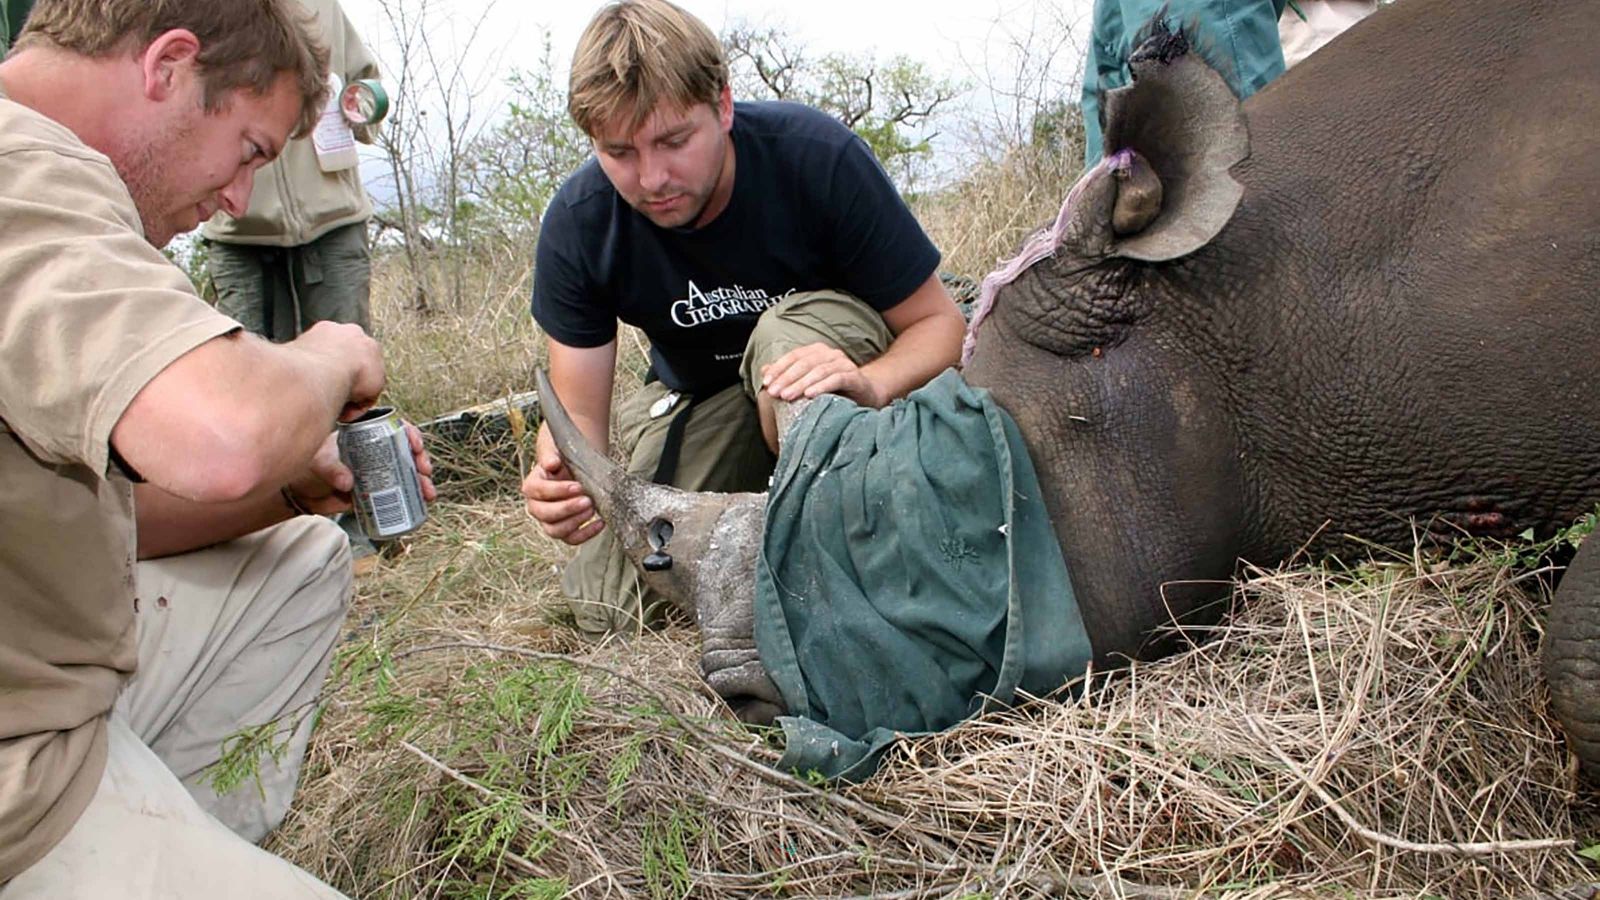 Attaching a transmitter to a rhino